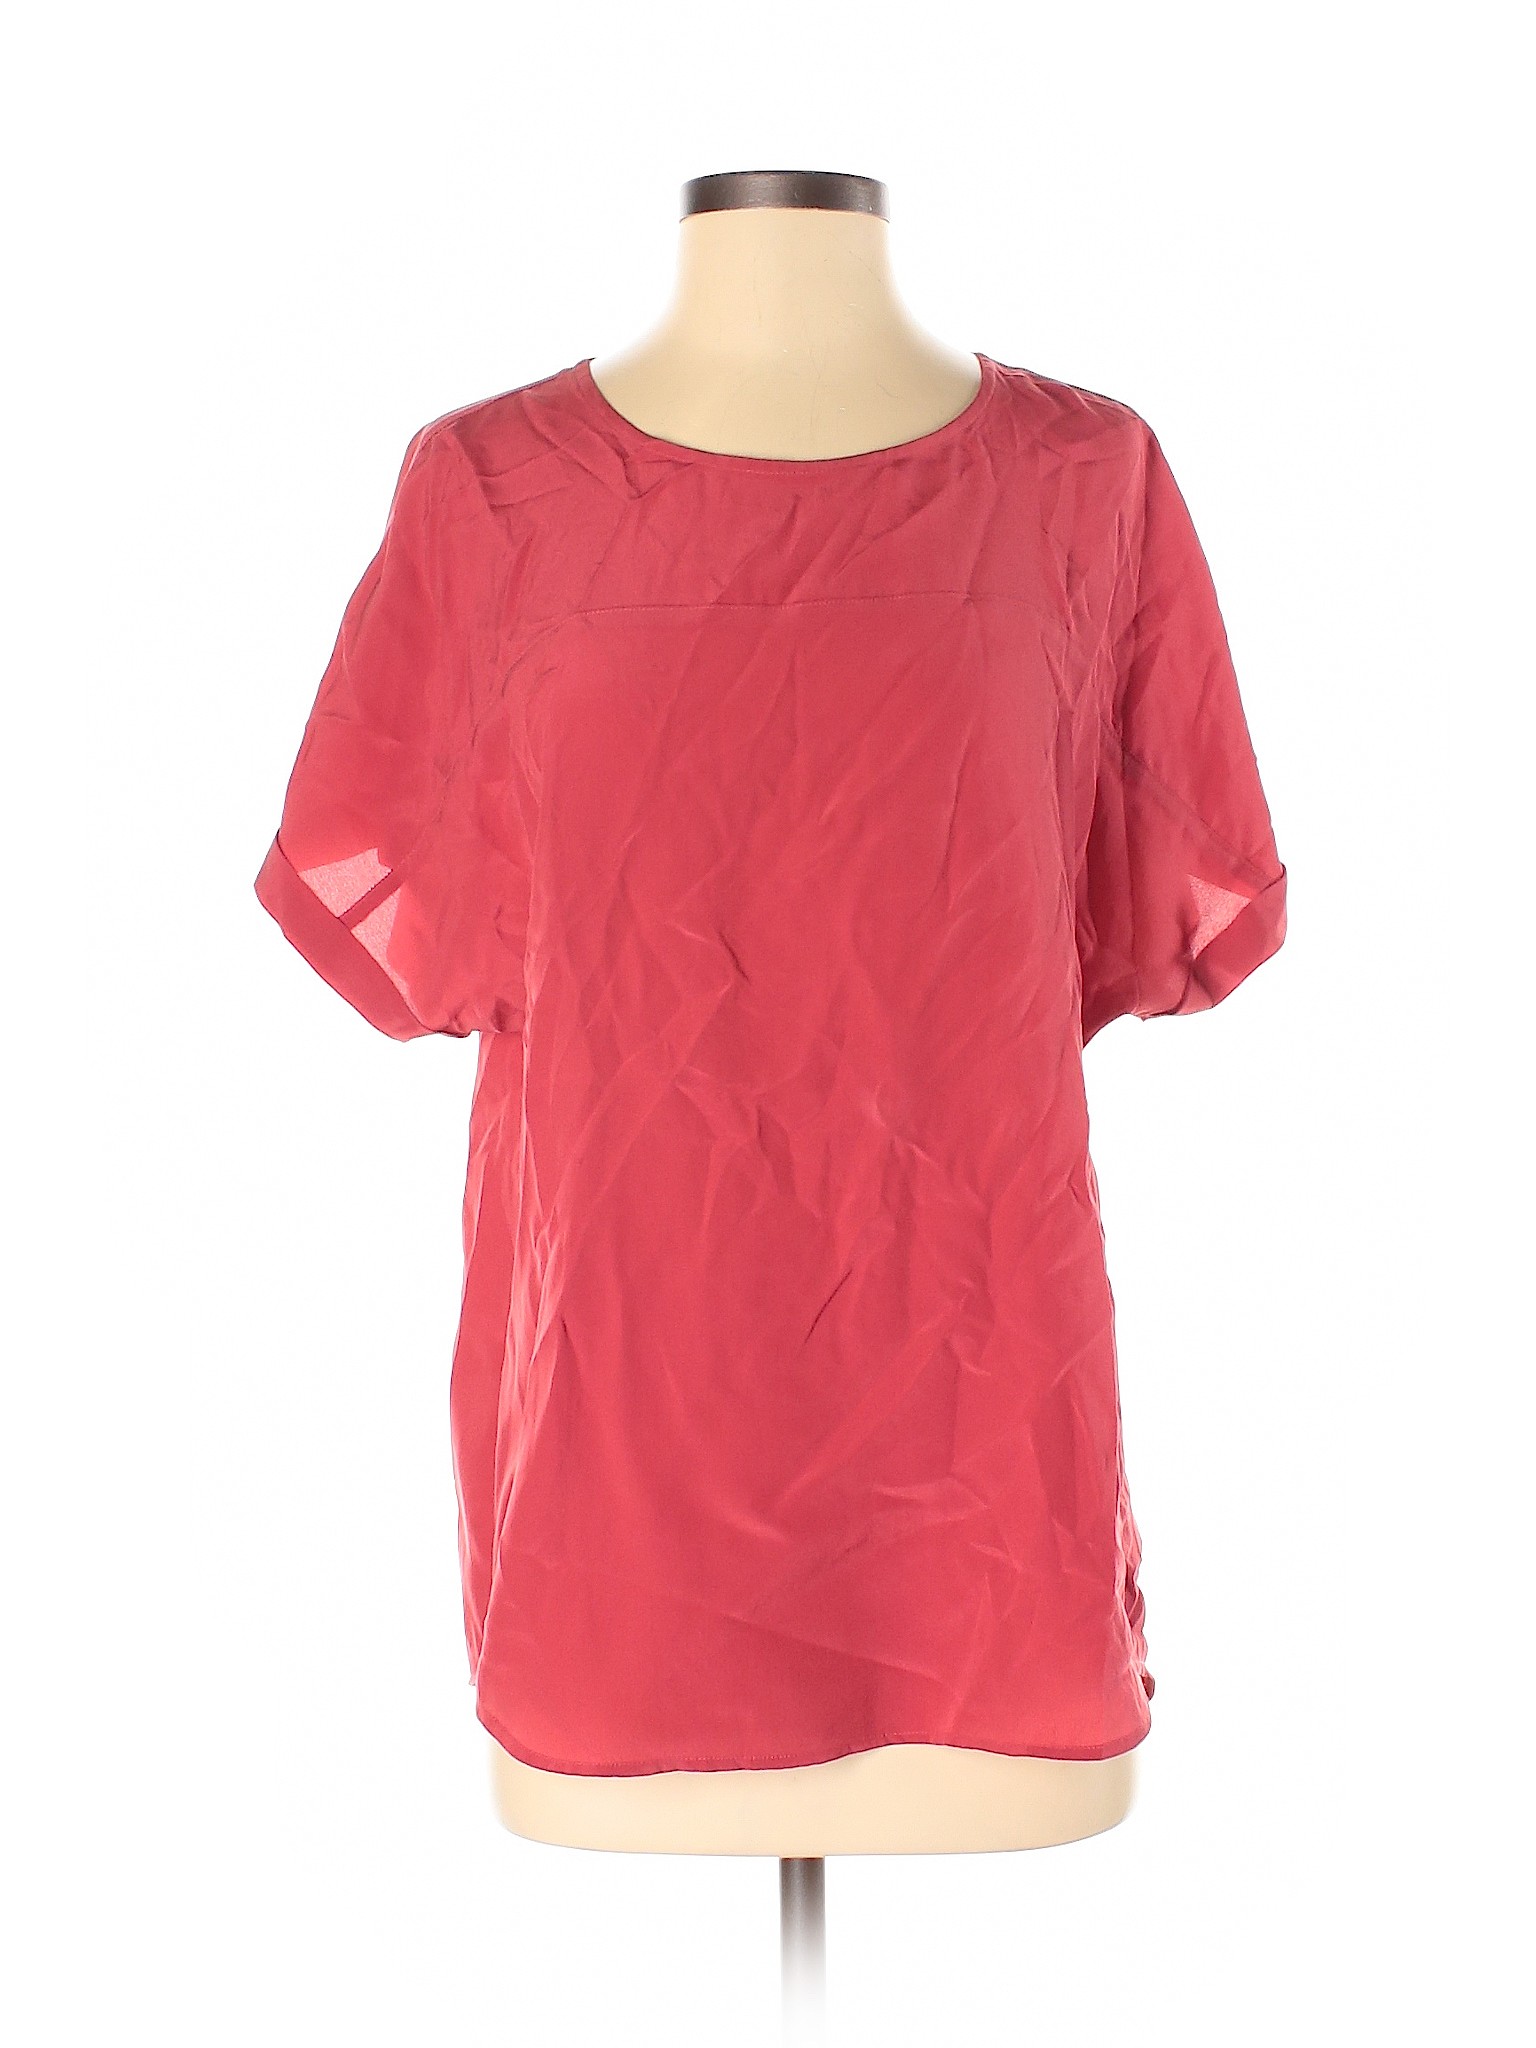 Madewell Women Red Short Sleeve Silk Top S | eBay